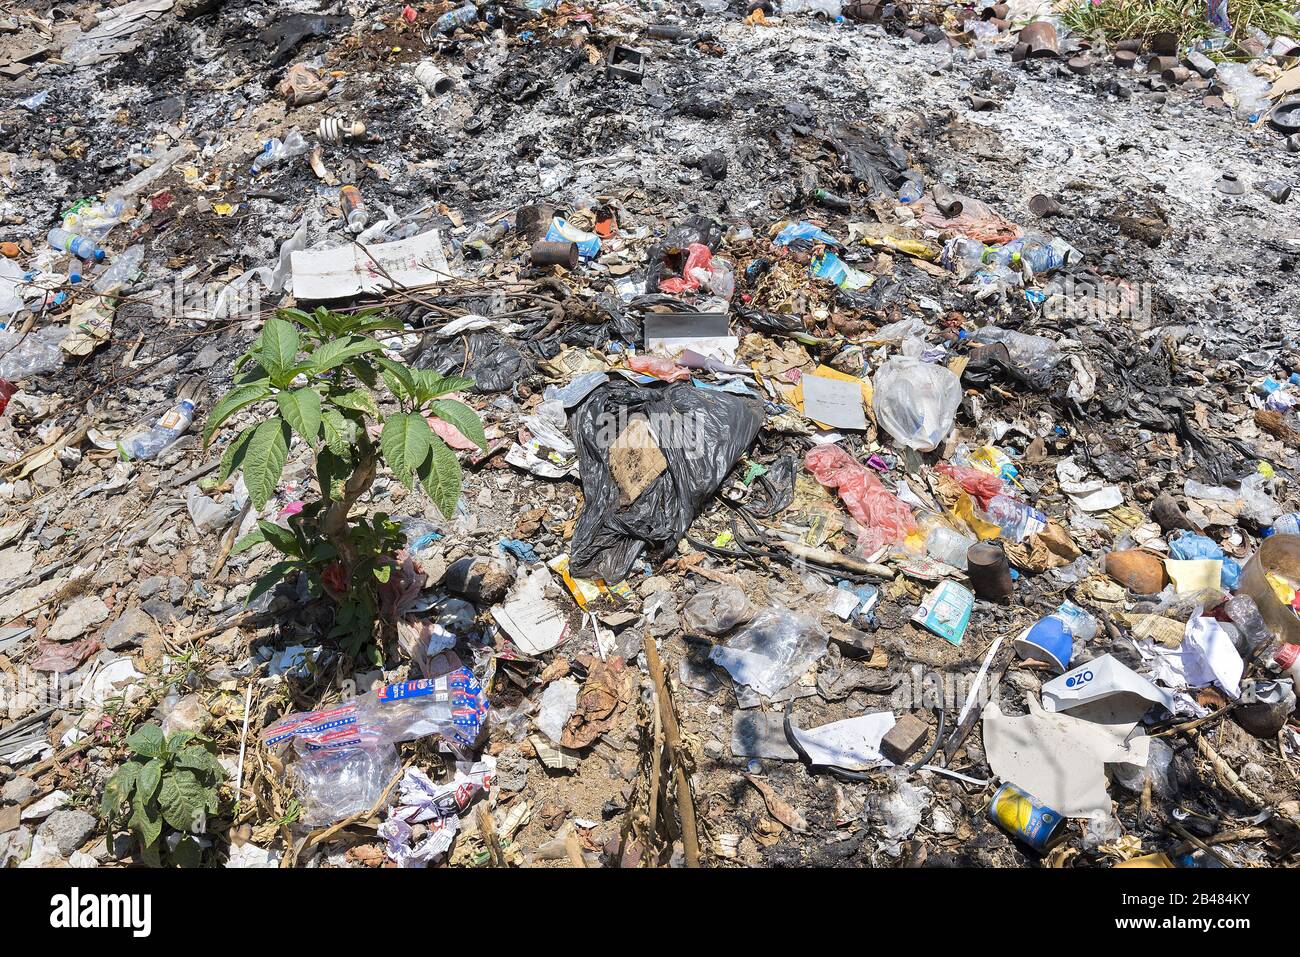 Nuwara, Sri Lanka: 03/20/2019: Discarded rubbish burnt and left in the open  - environmental hazard. Stock Photo